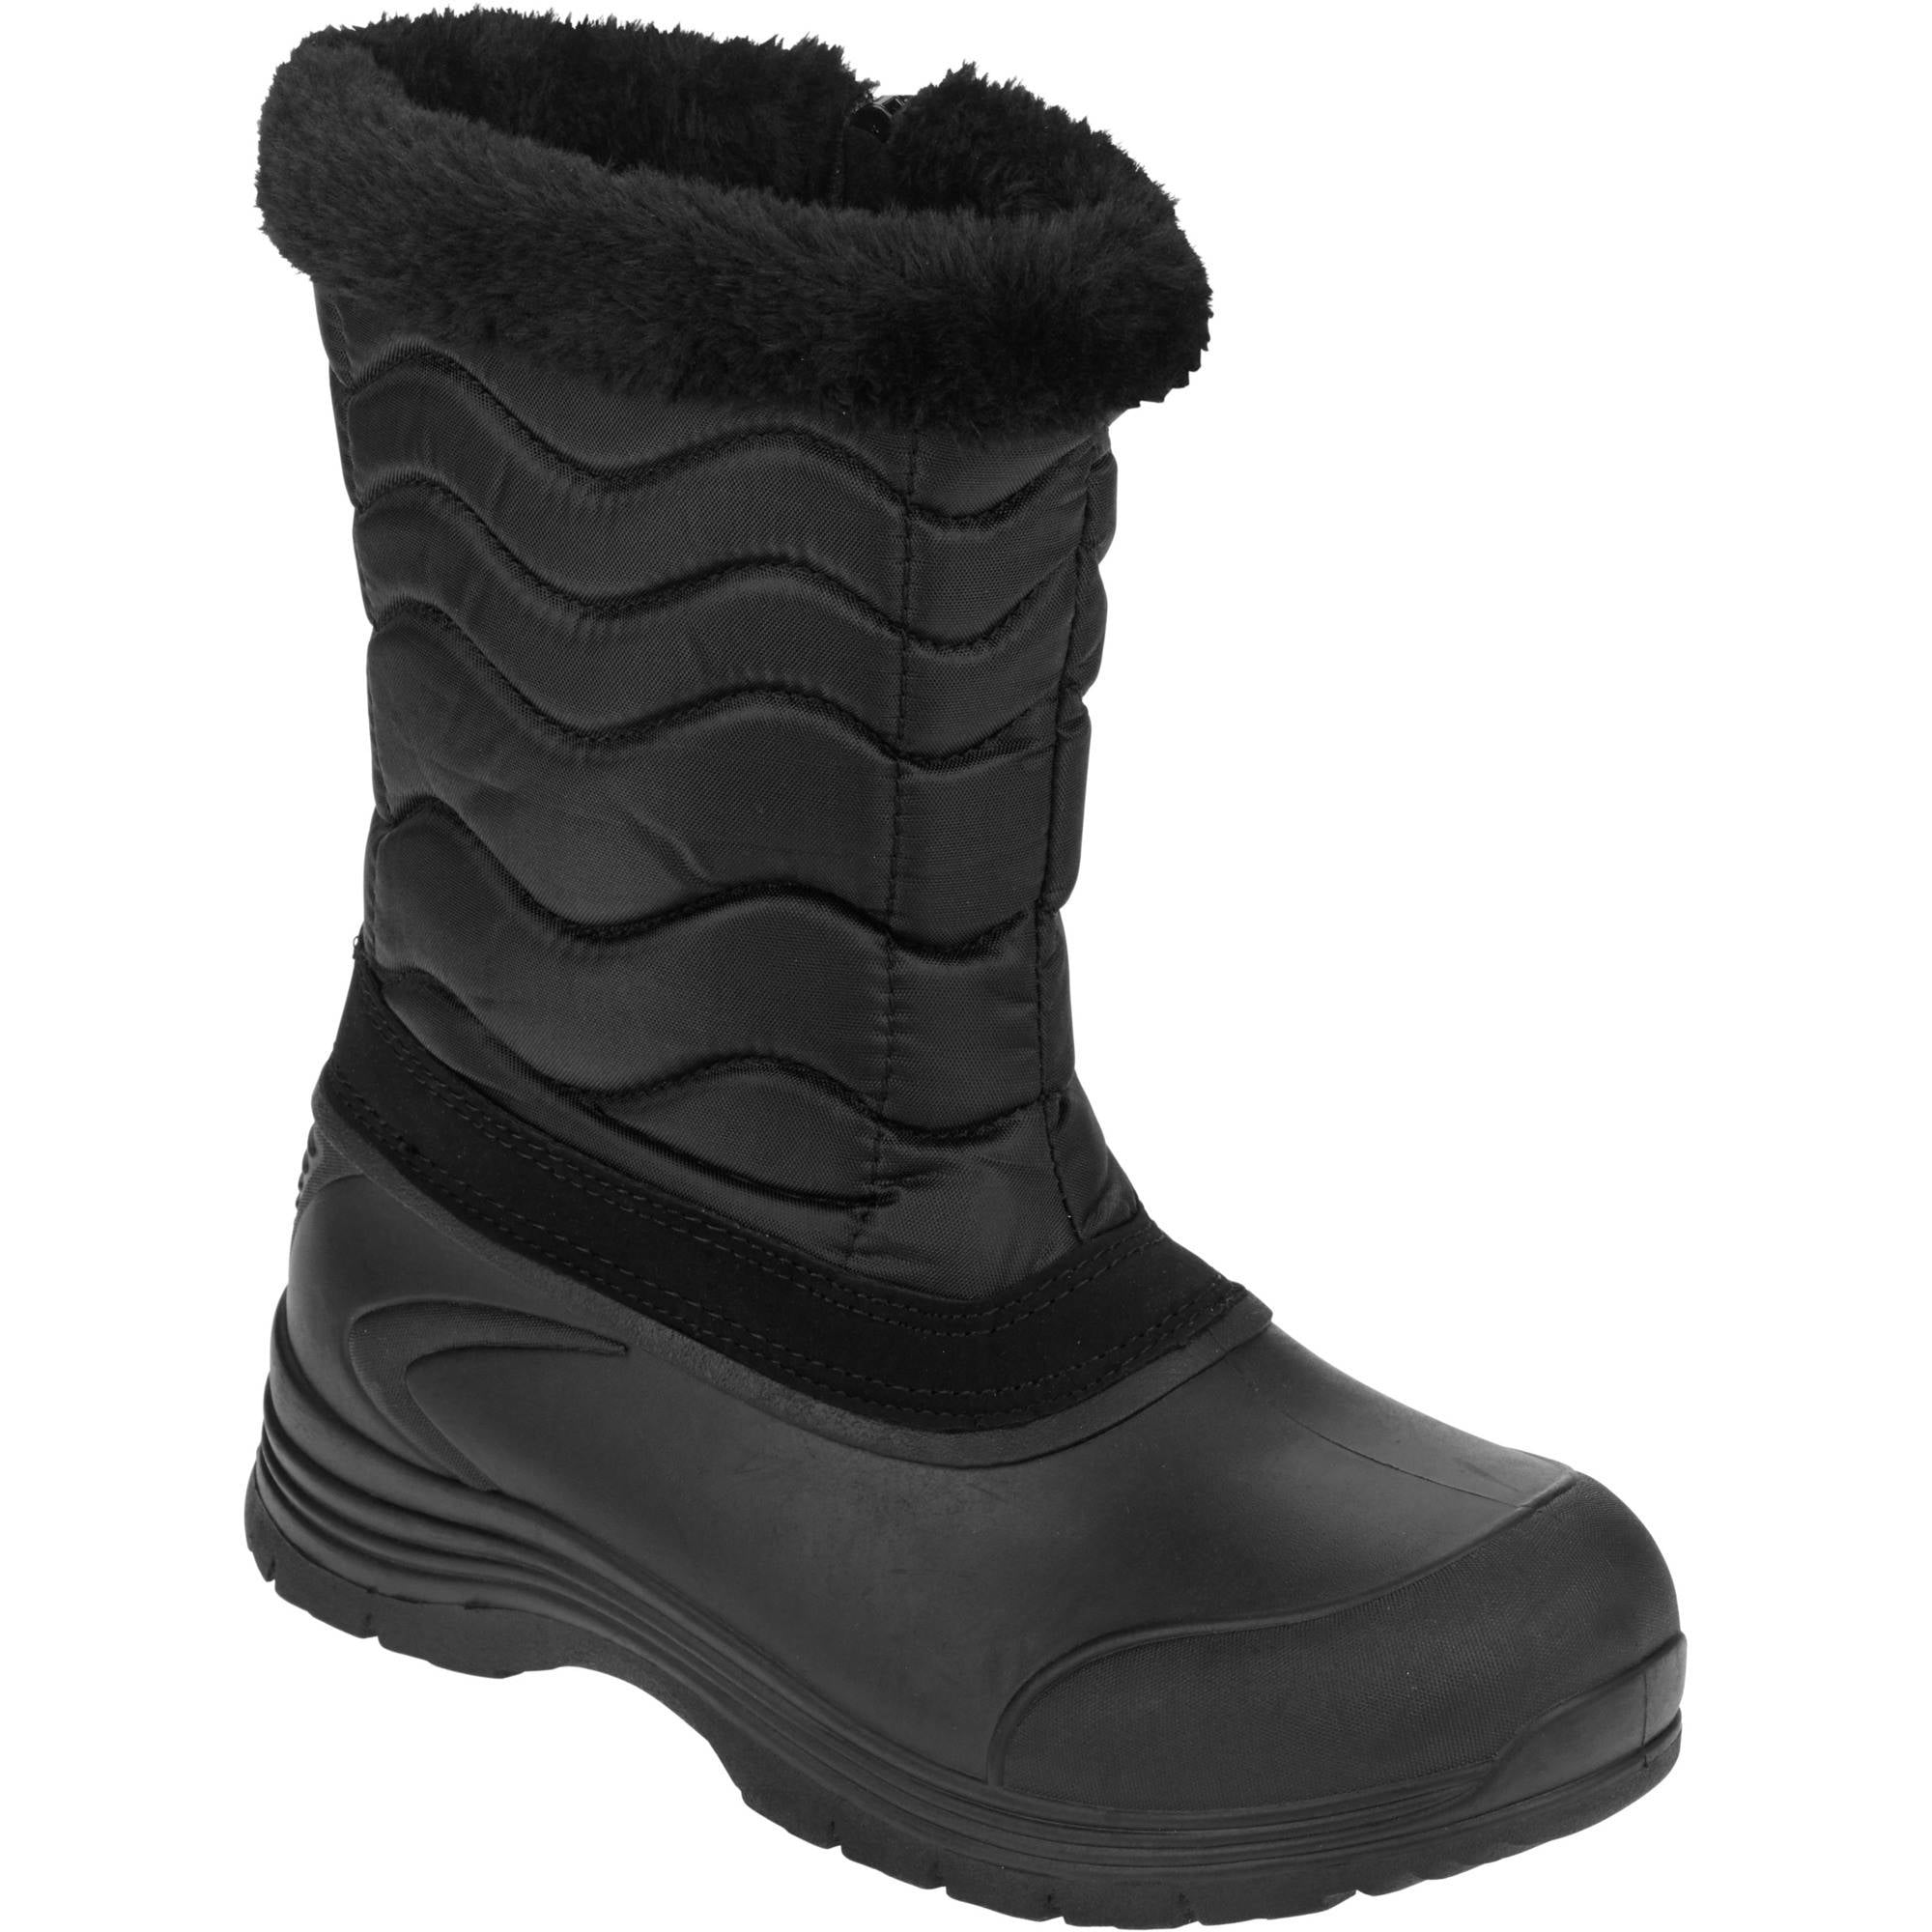 winter boots at walmart